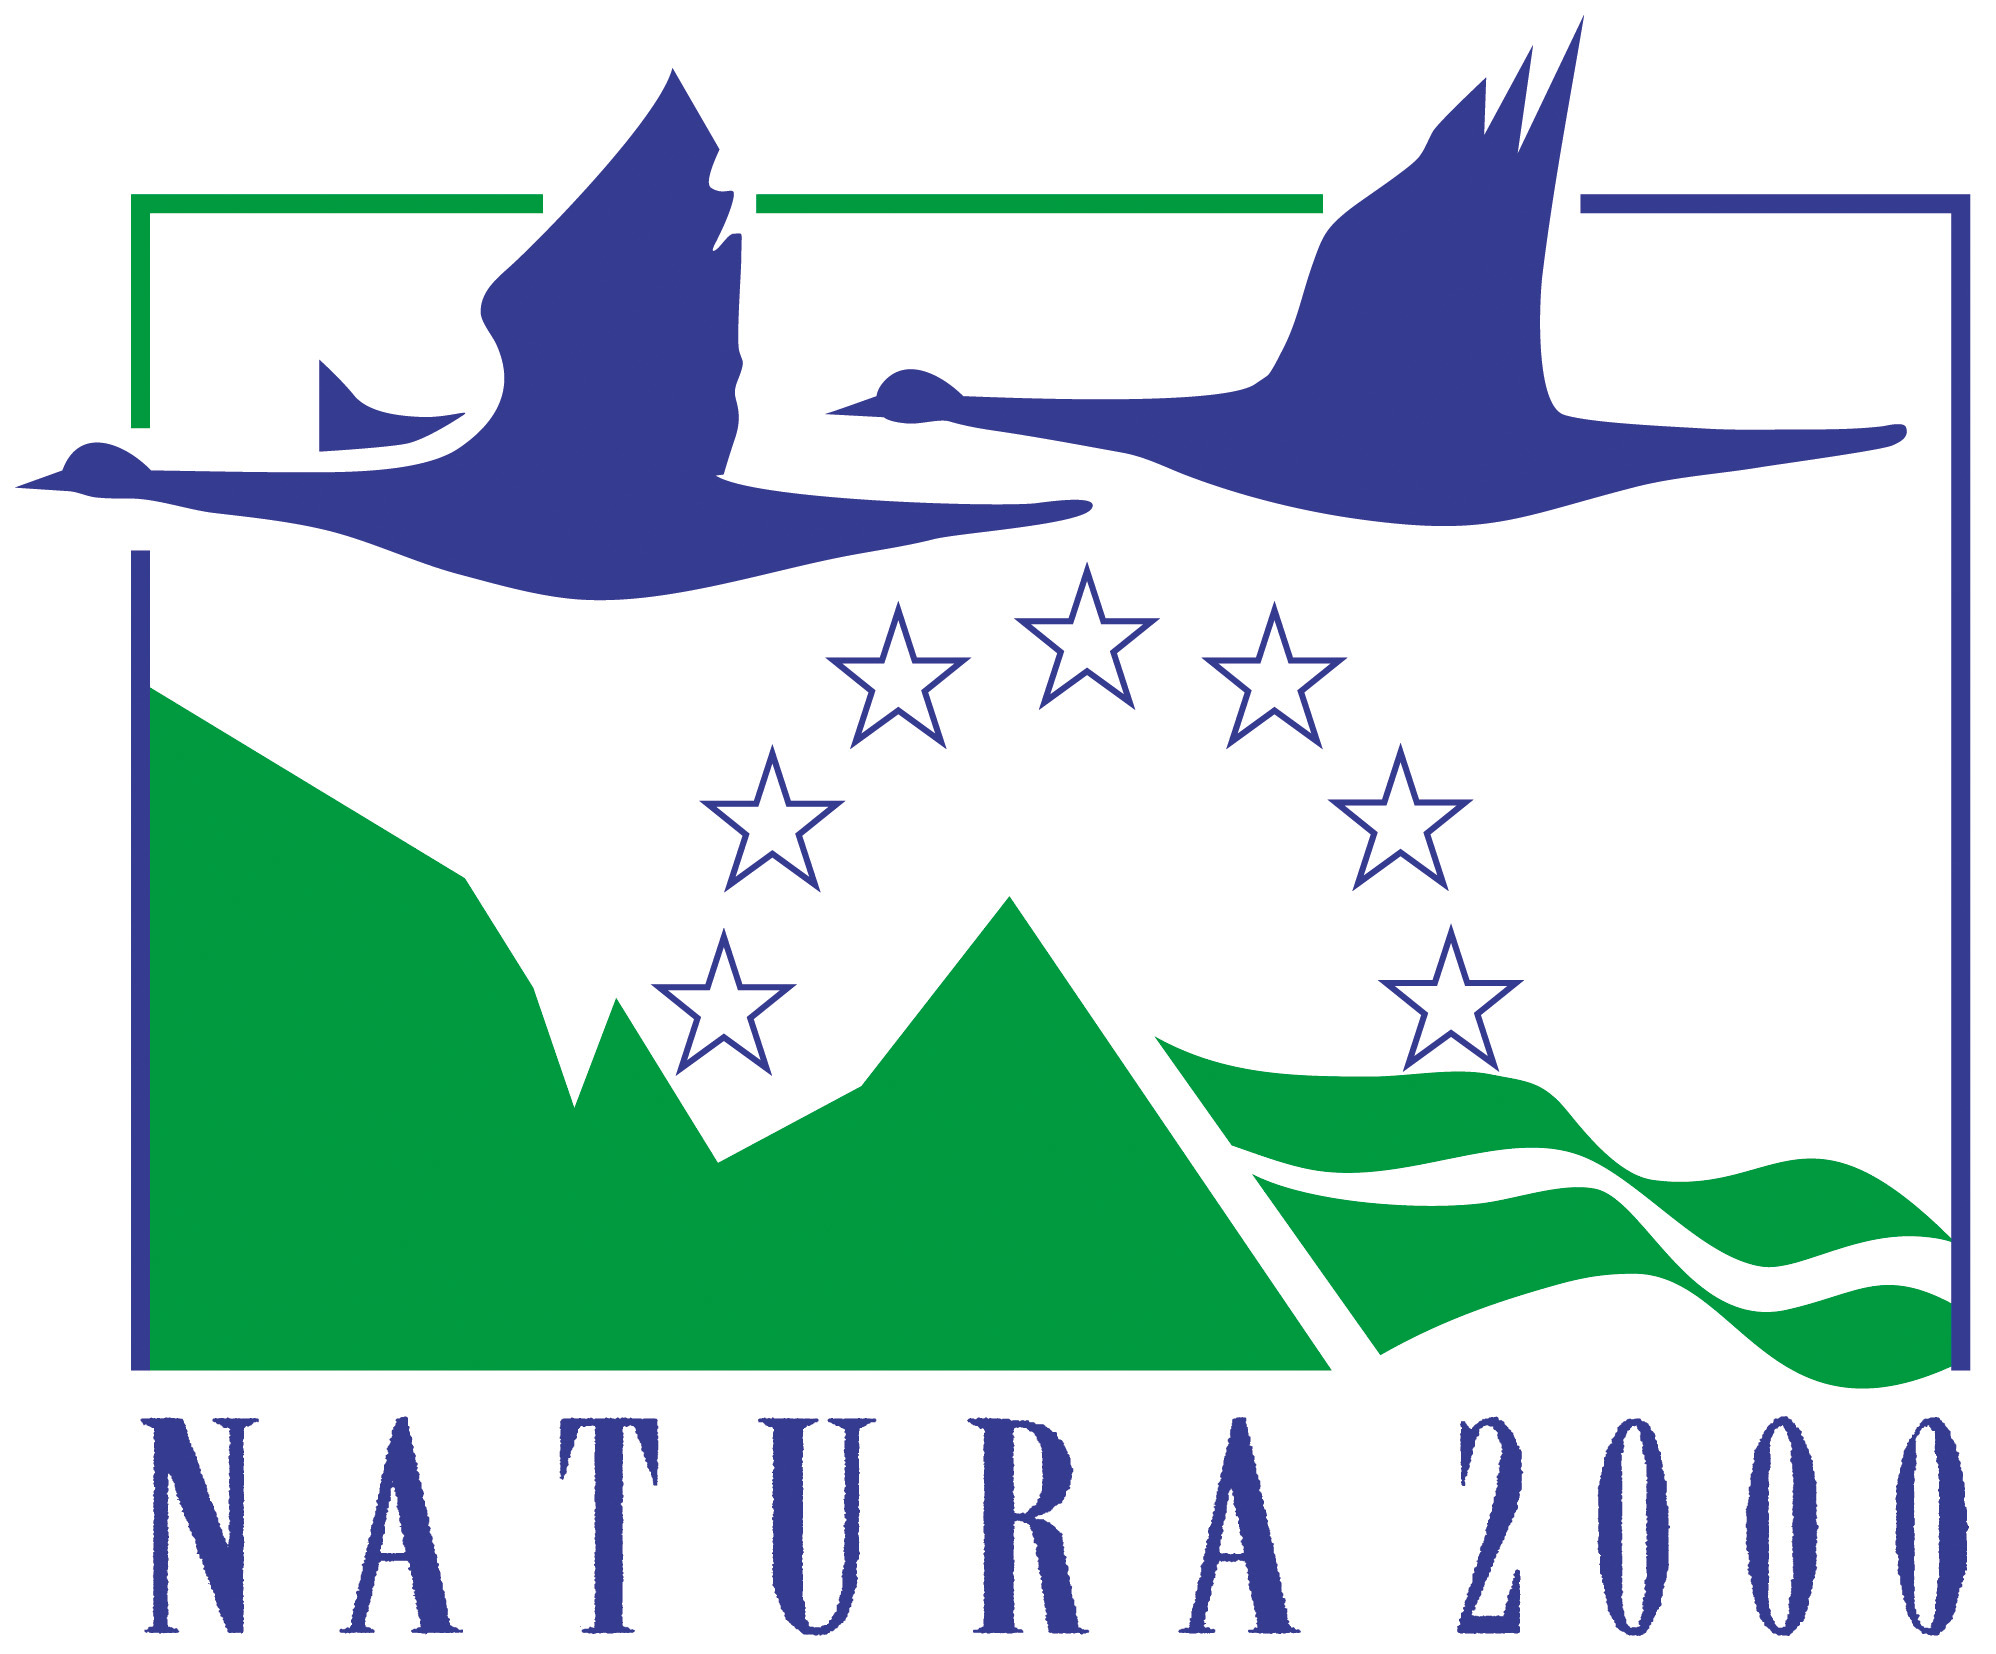 More information about "O αναθεωρημένος εθνικός κατάλογος Natura"